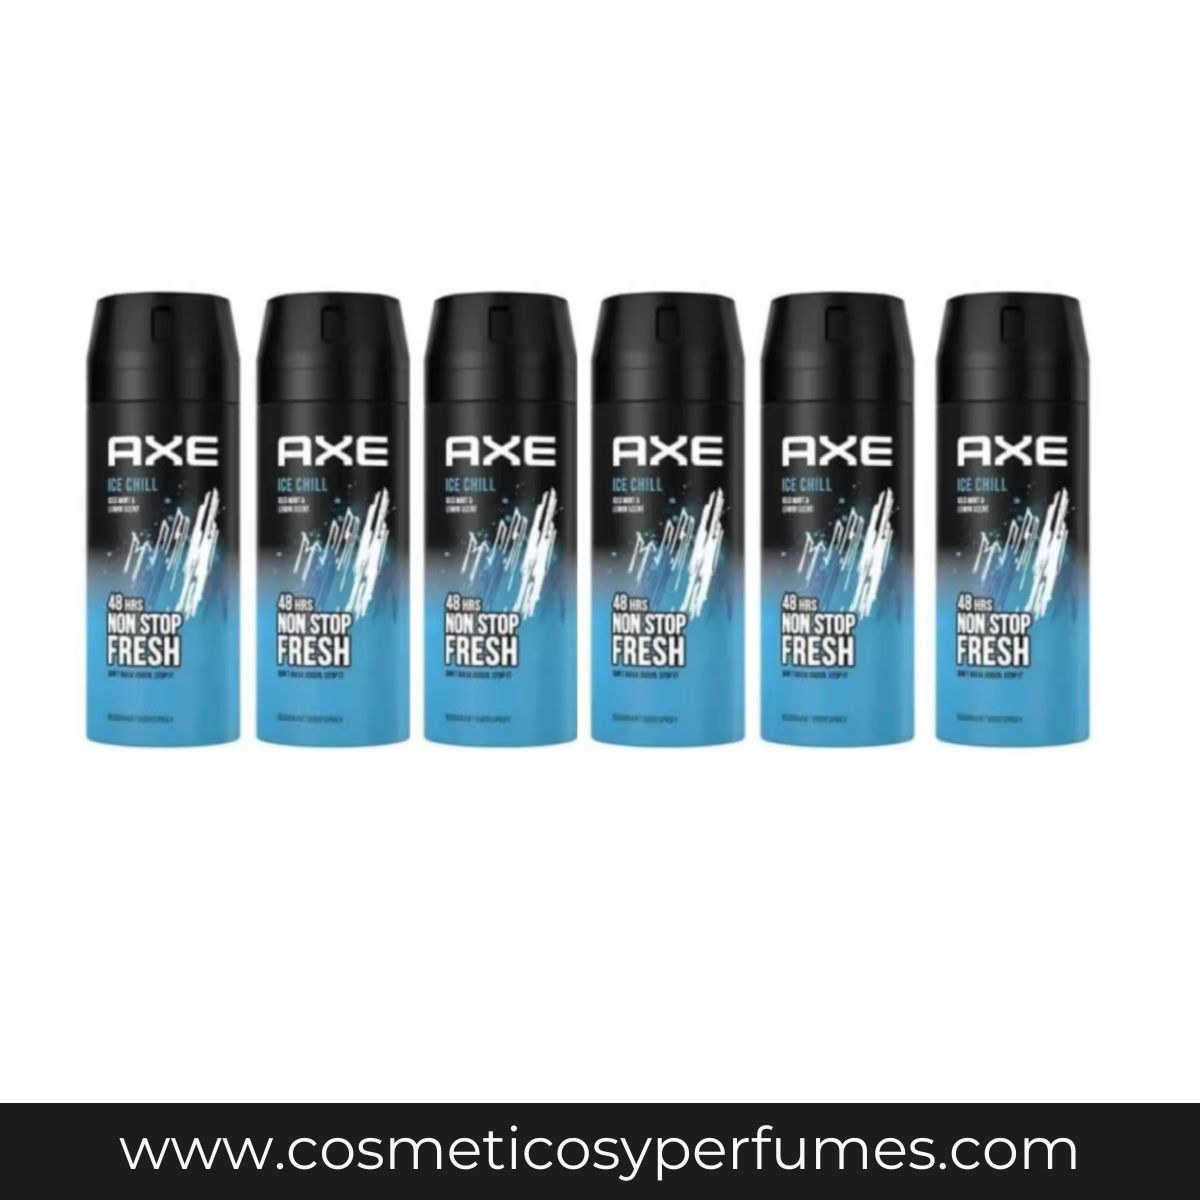 AXE - Desodorante Hombre ICE CHILL Spray 48h Packs ahorro (150 ml)